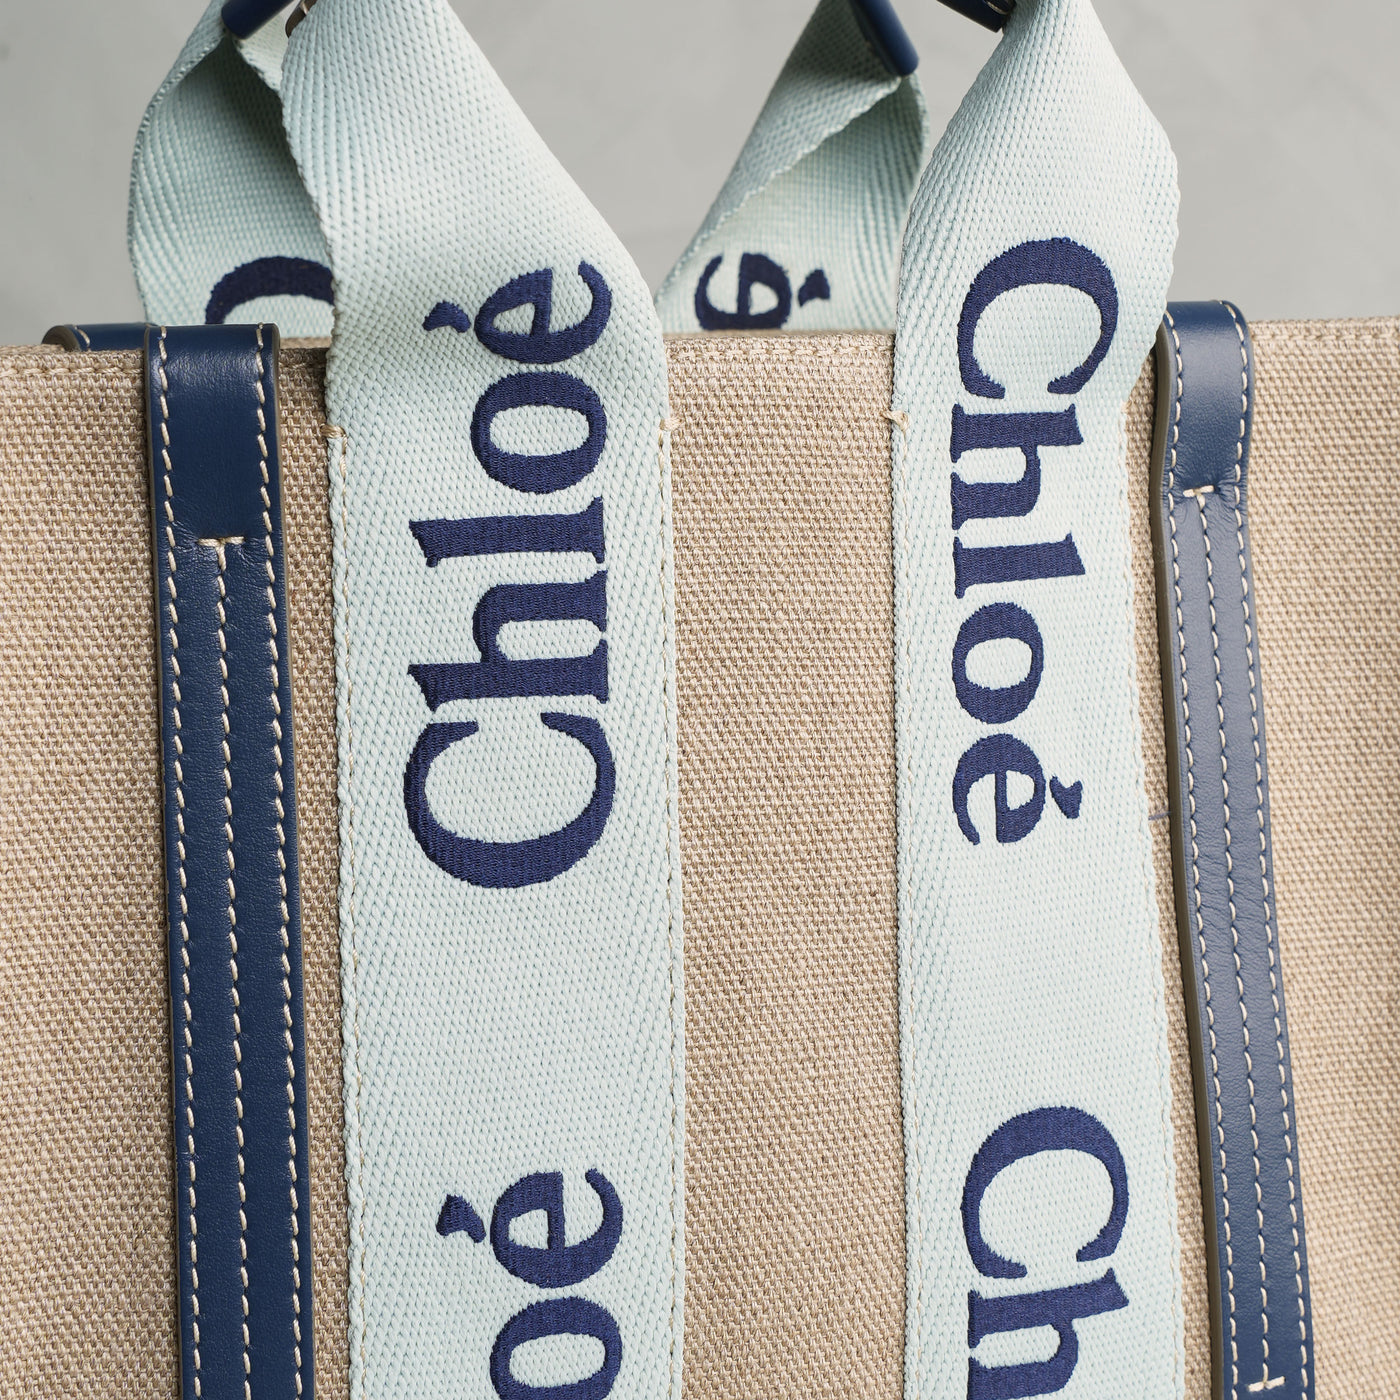 CHLOÉ Woody small blue linen logo tote bag cross body bag